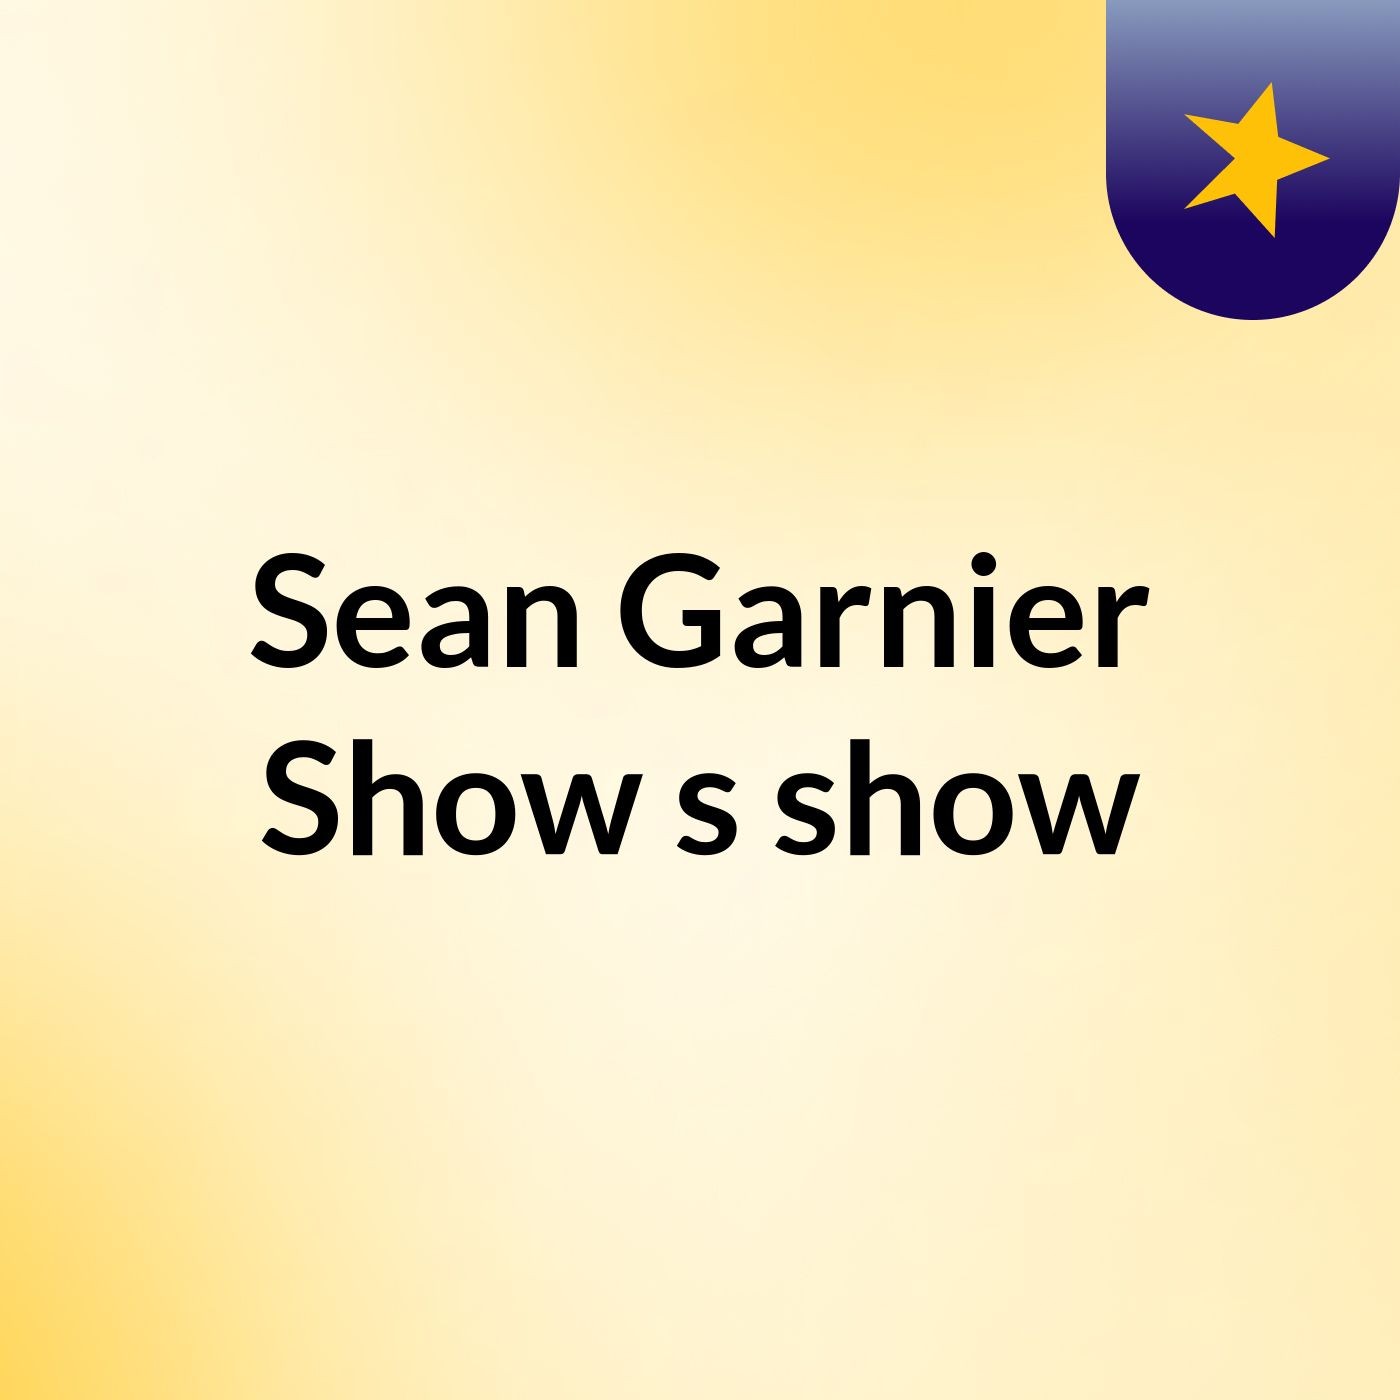 Episódio 15 - Sean Garnier Show's show